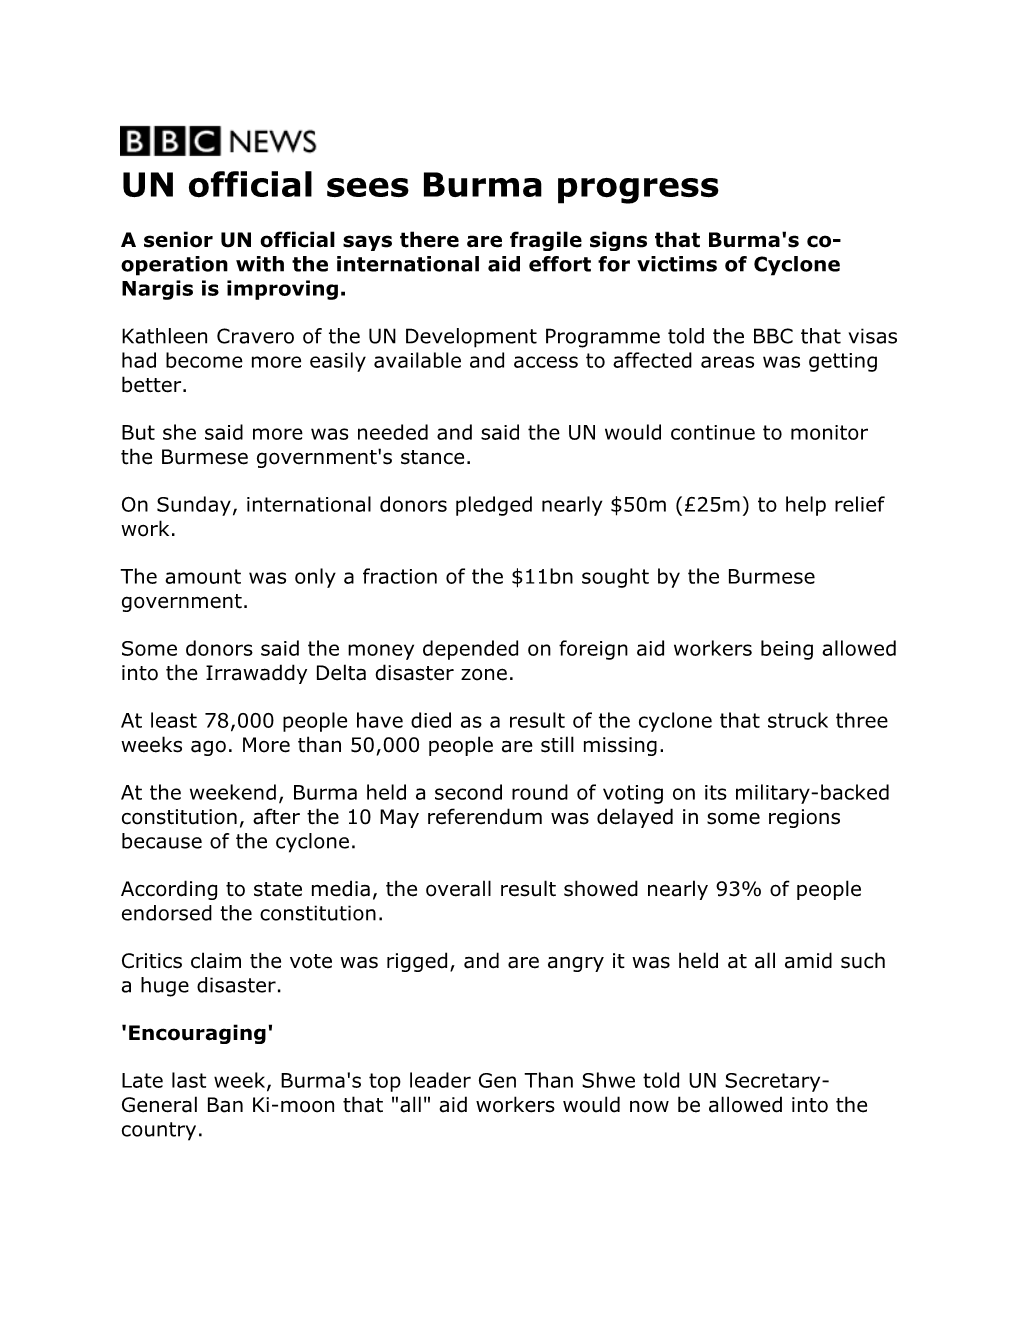 UN Official Sees Burma Progress